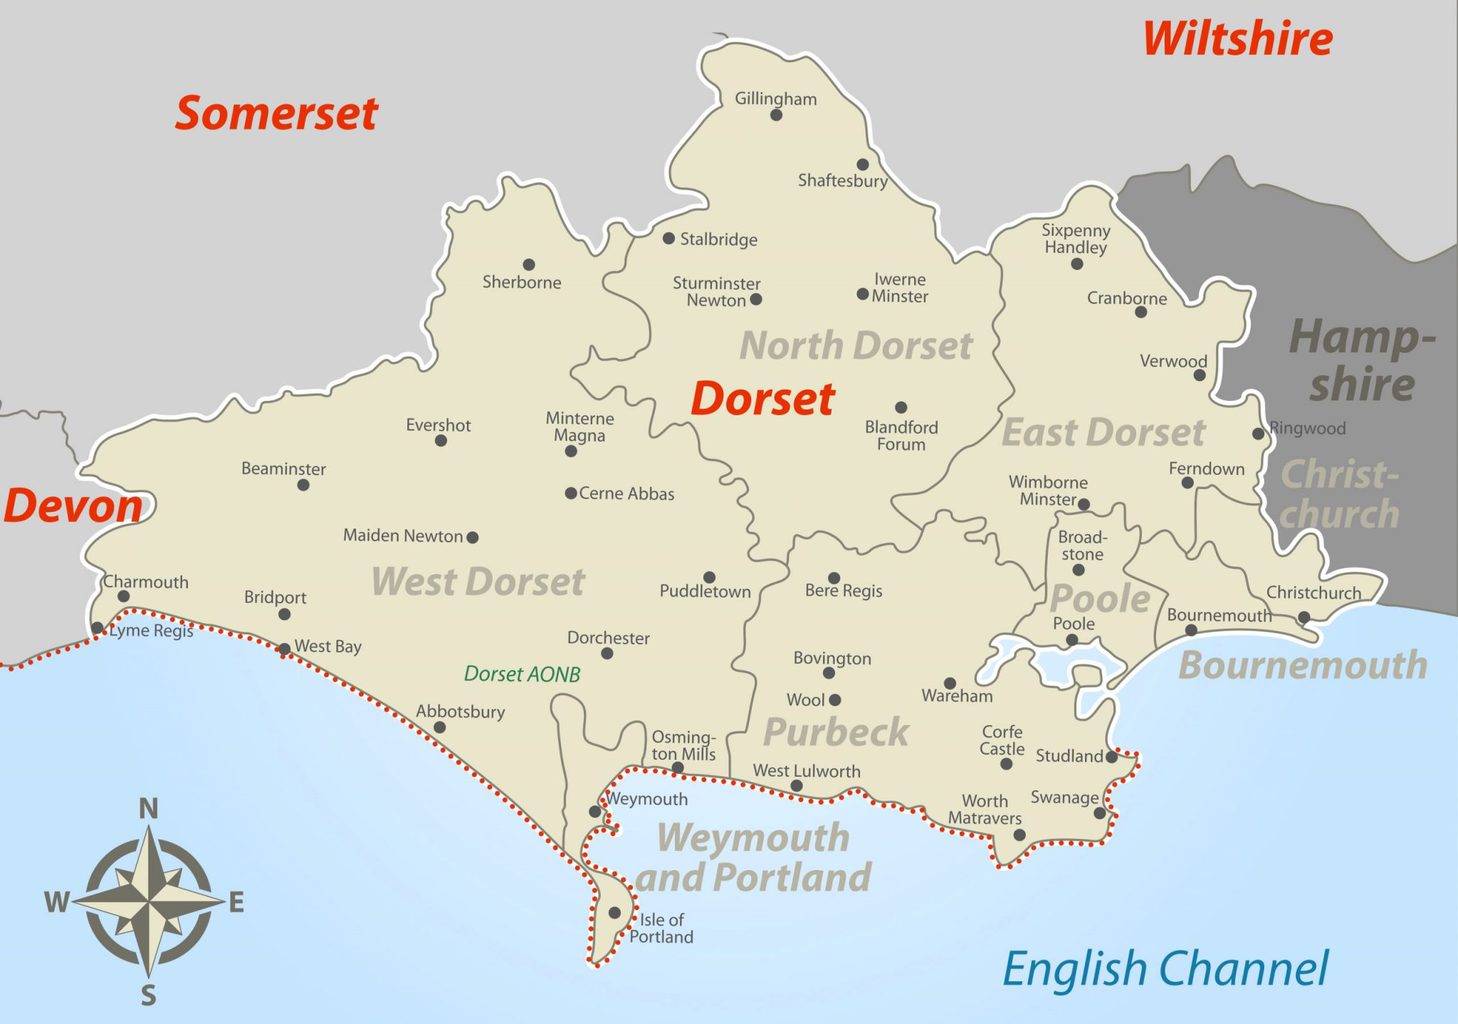 dorset coast geography case study